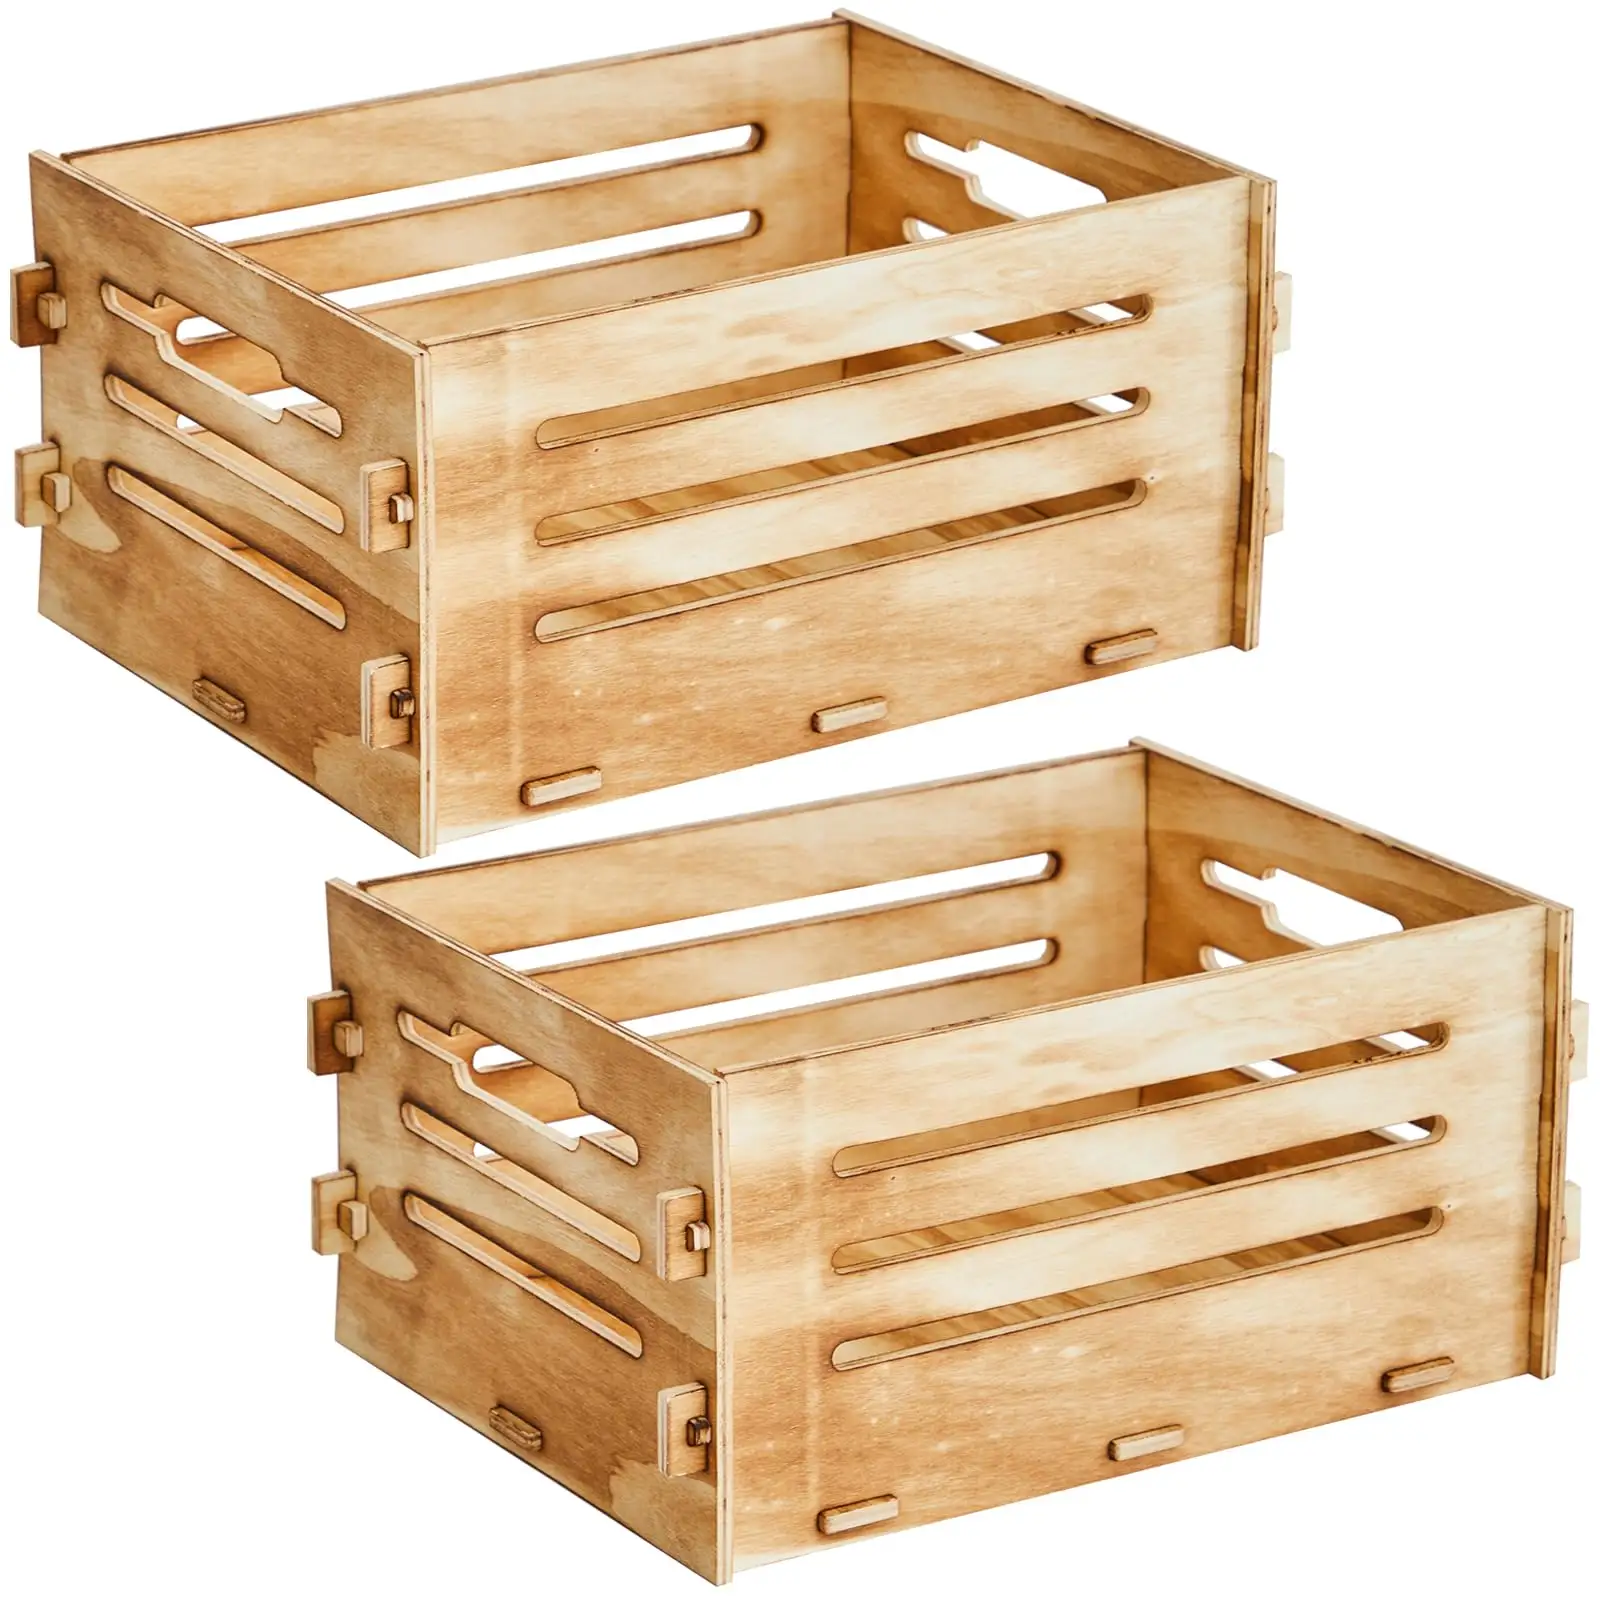 Cokelat antik penyimpanan peti kayu buatan tangan Set kotak rumah pedesaan 3 kotak peti penyimpanan kayu bersarang ekstra besar